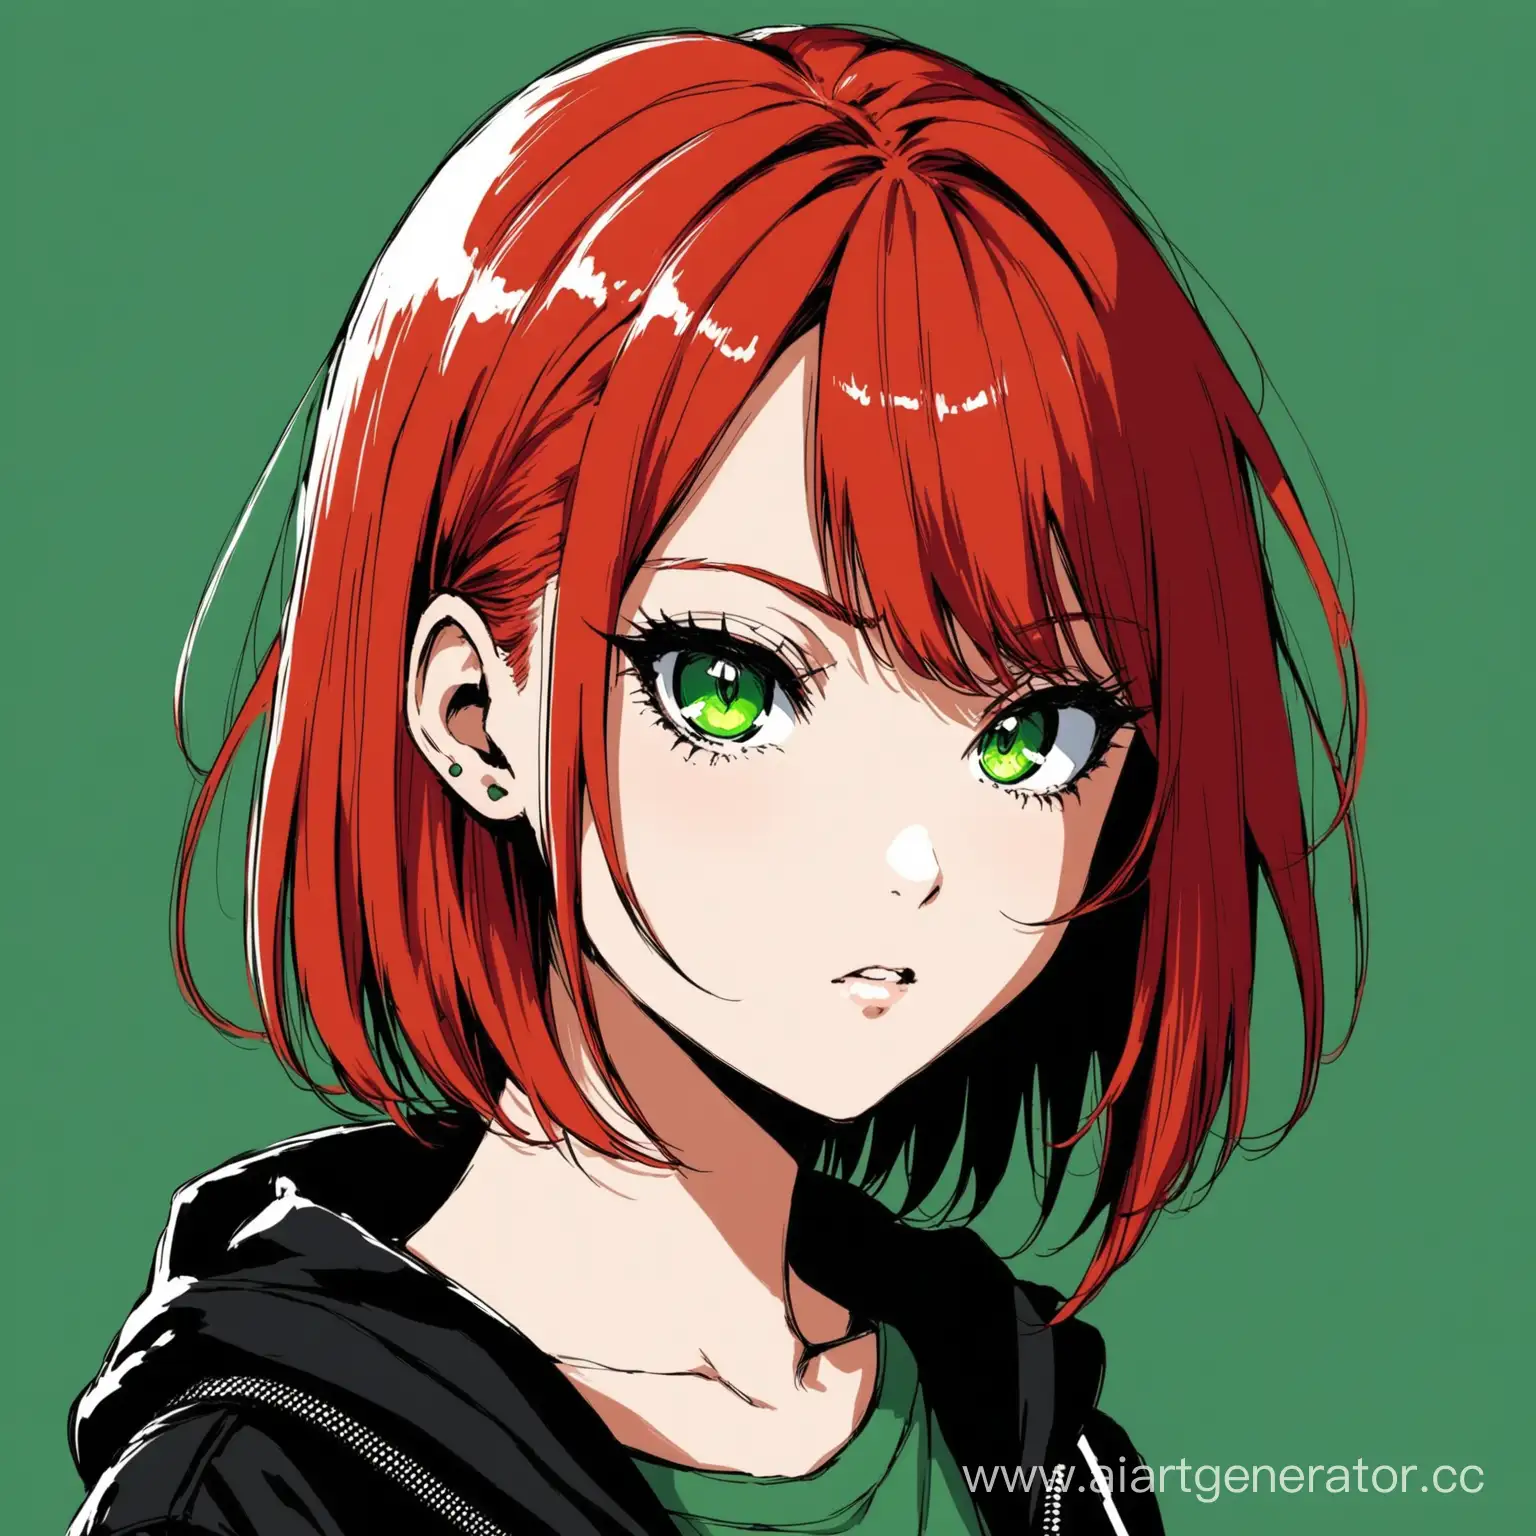 redhead girl, anime, post-punk, green eyes
